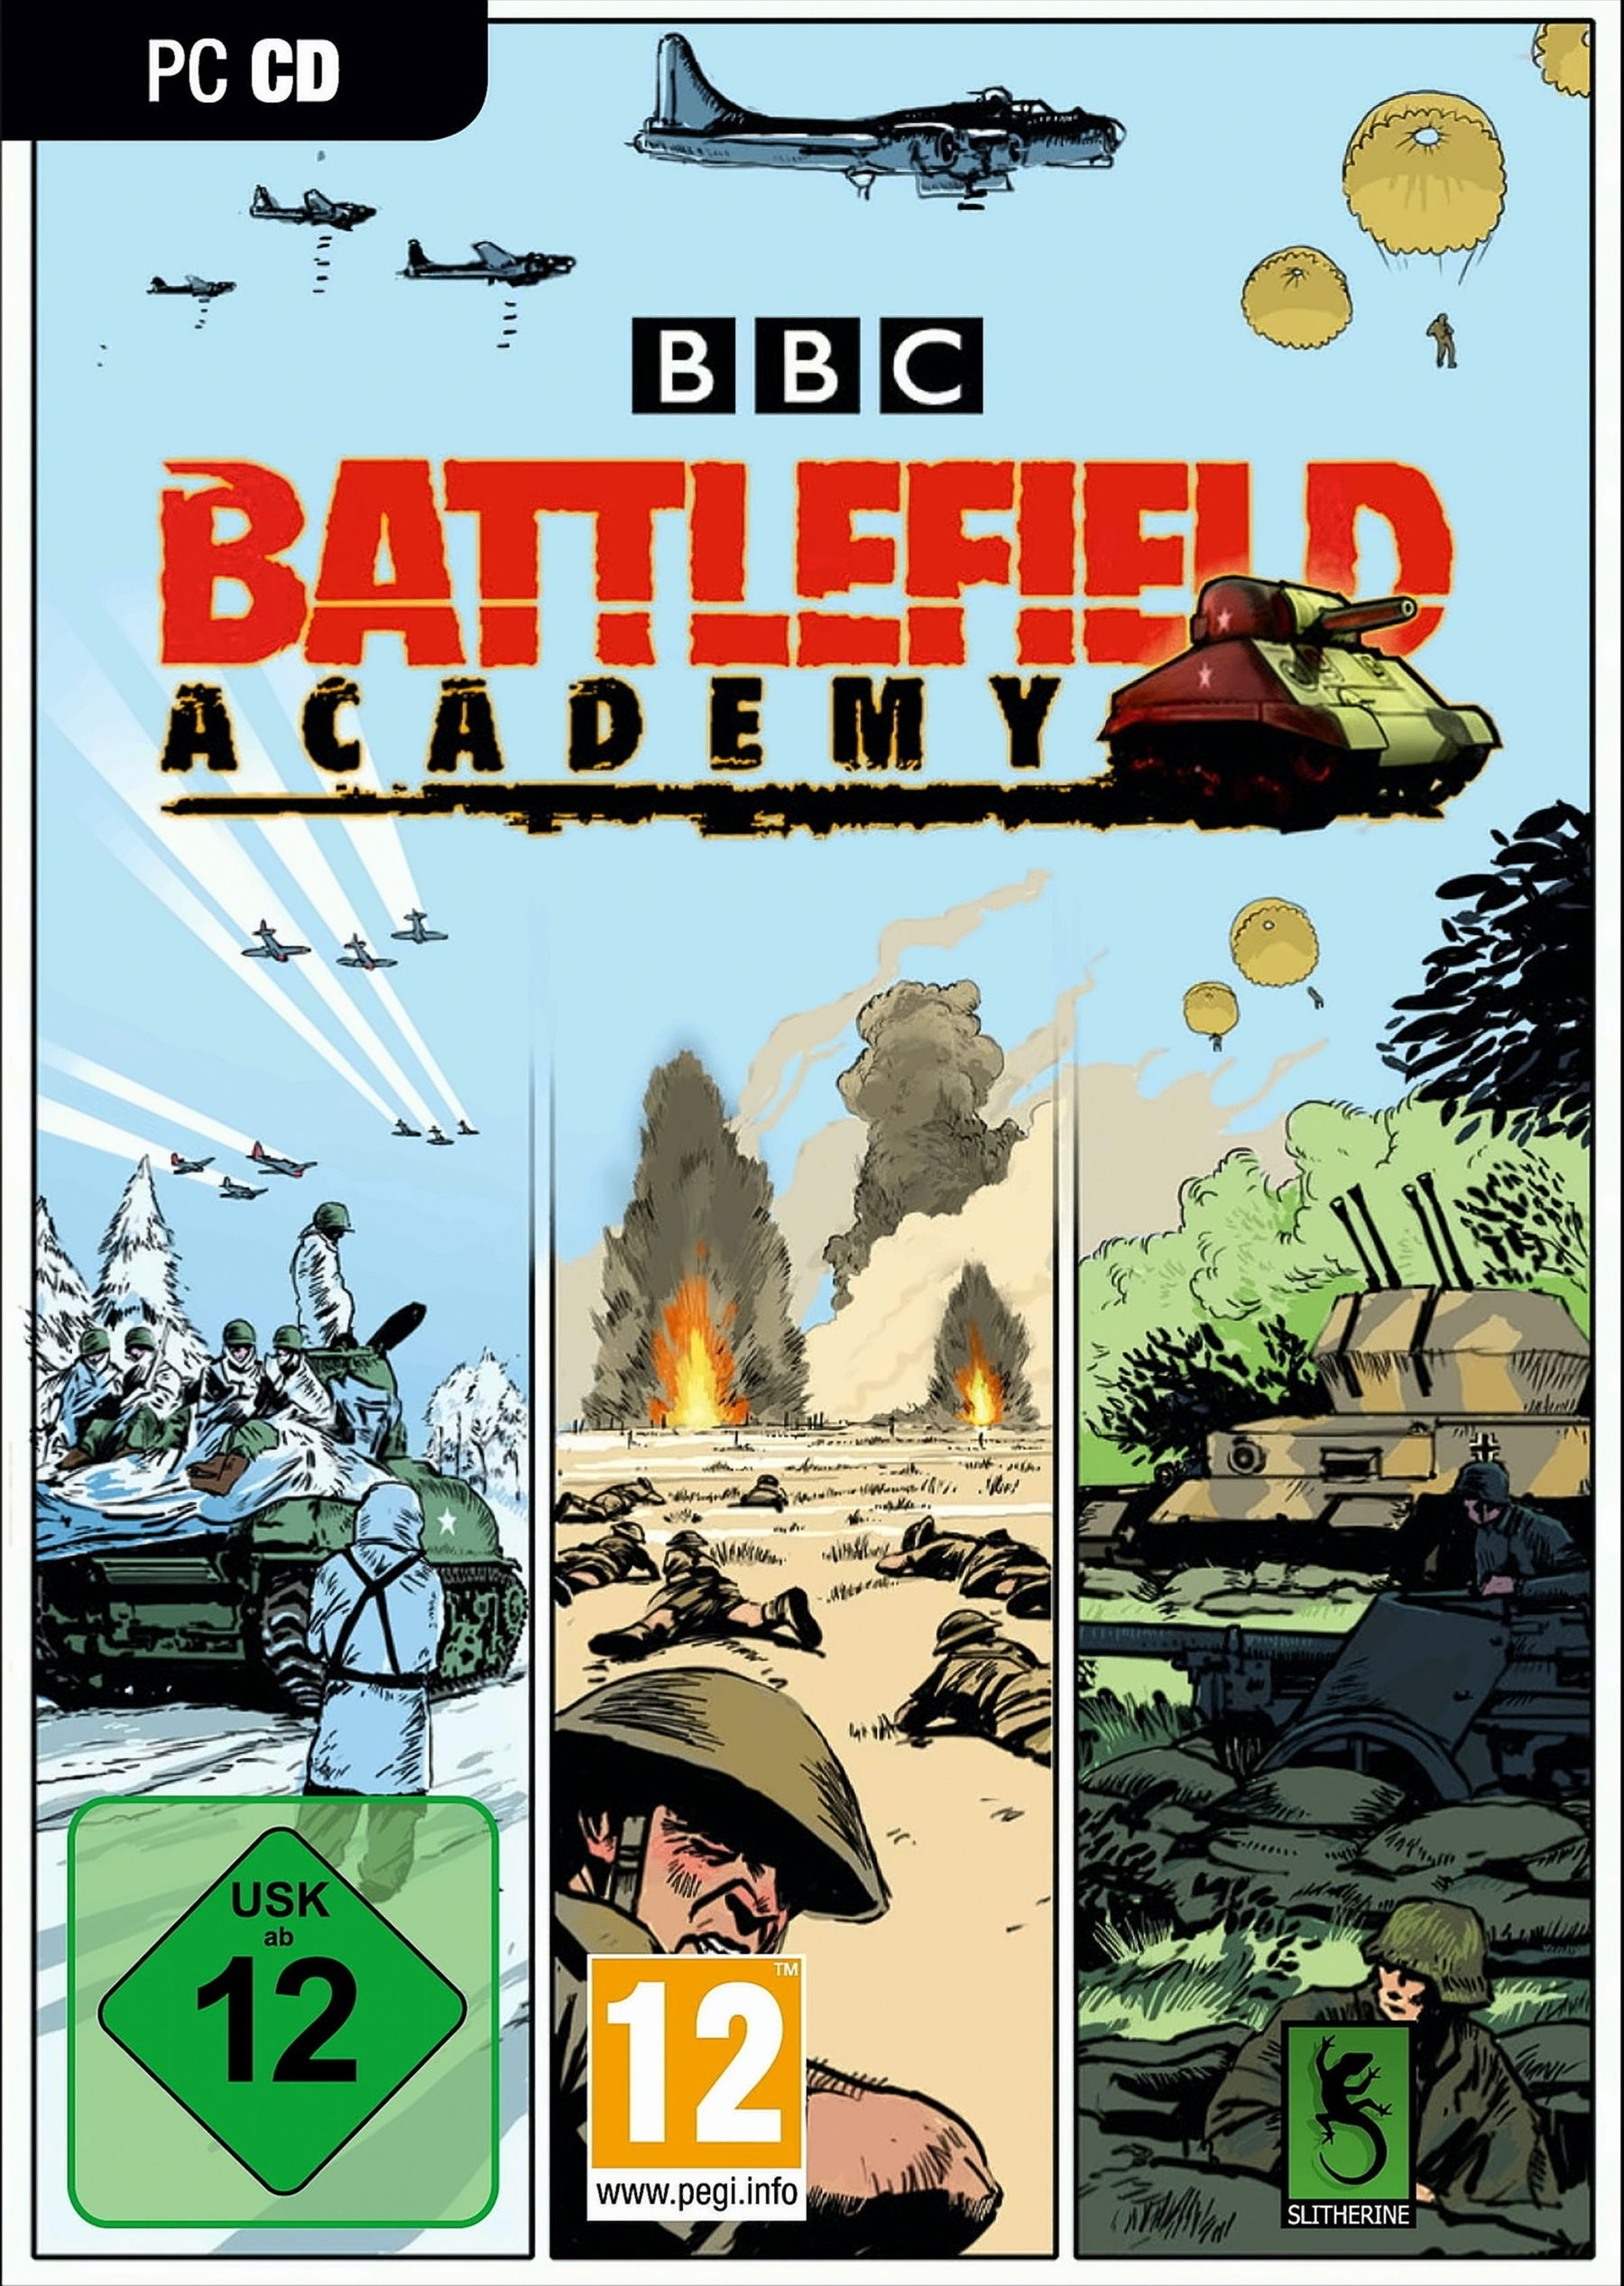 - Battlefield BBC Academy [PC]